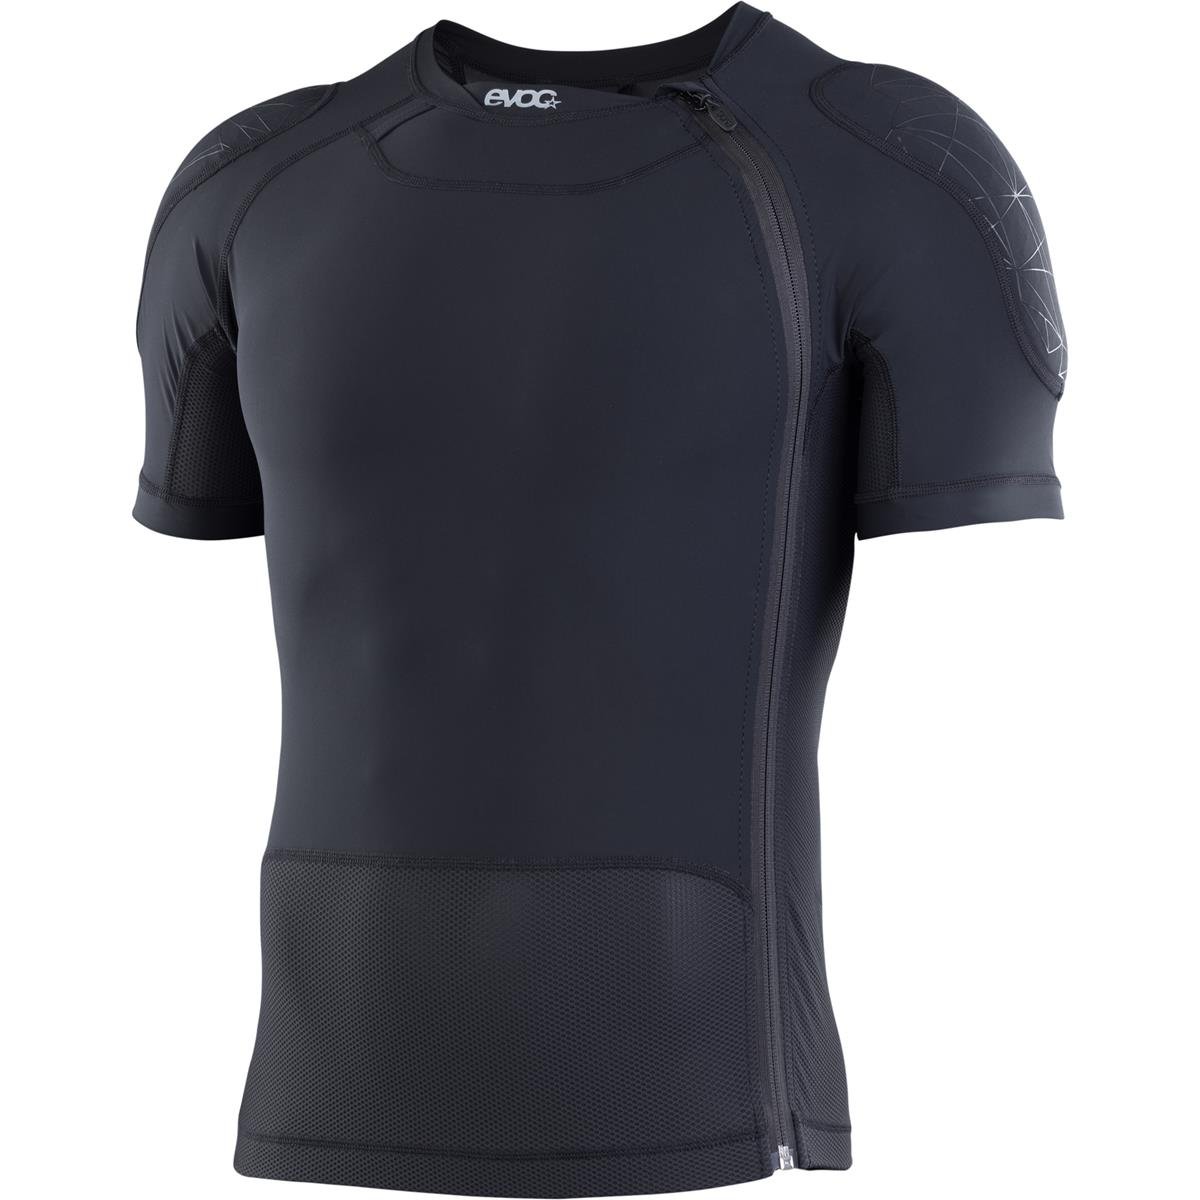 Evoc Short Sleeve Protector Shirt Zip Black